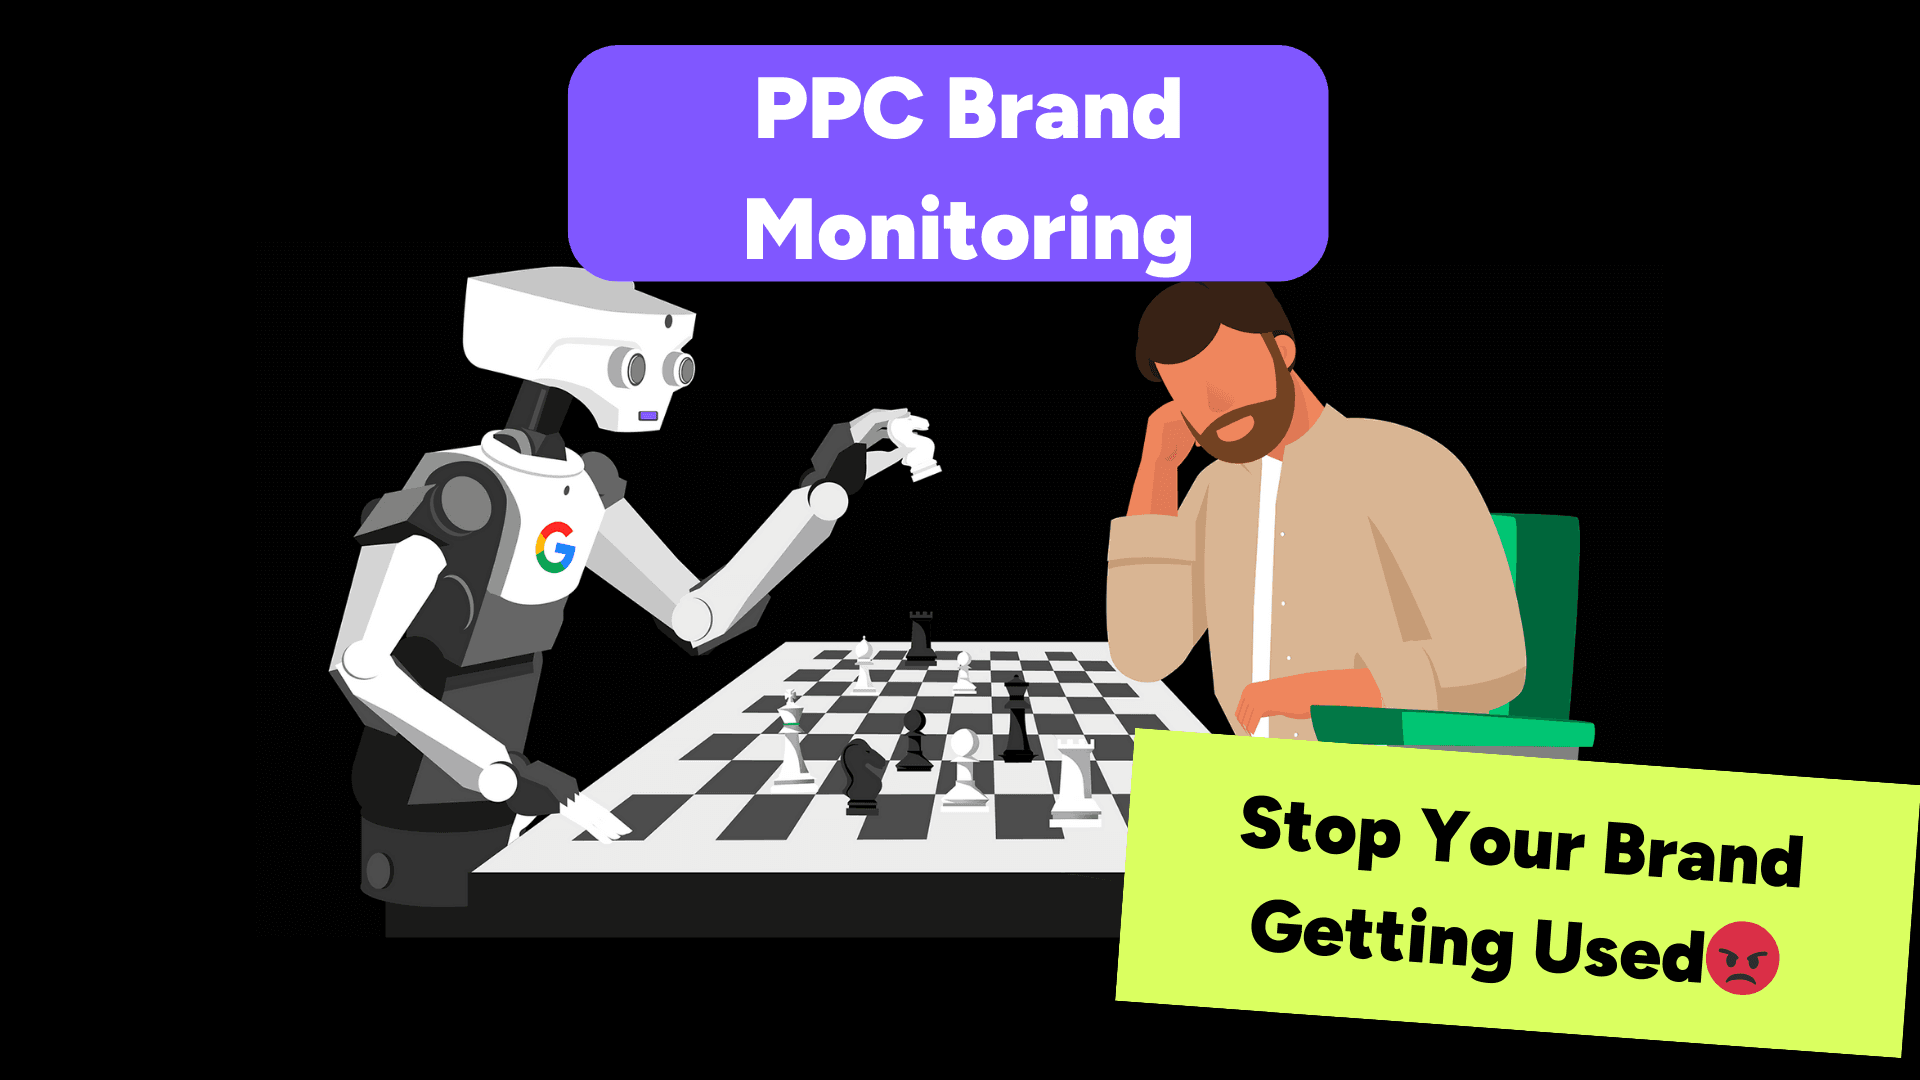 ppc brand monitoring tools